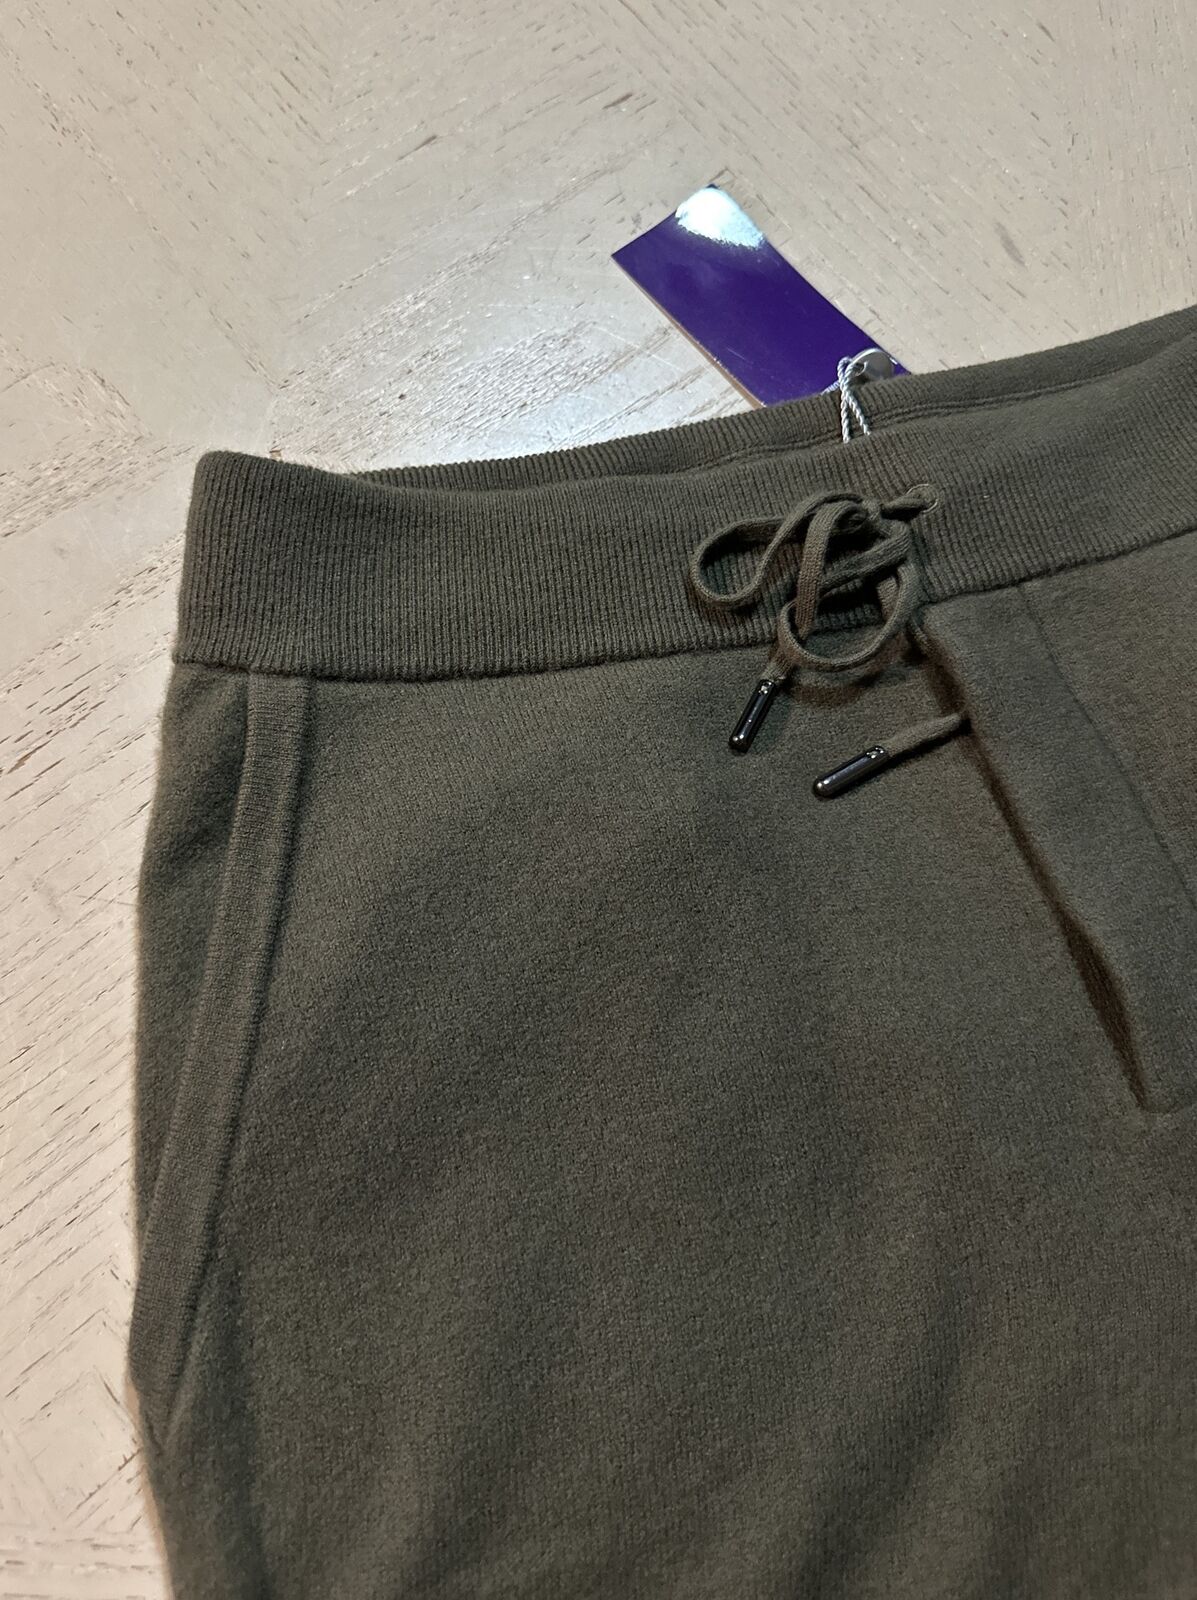 New $995 Ralph Lauren Purple Label Men’s Drawstring Jogging Pants Olive M